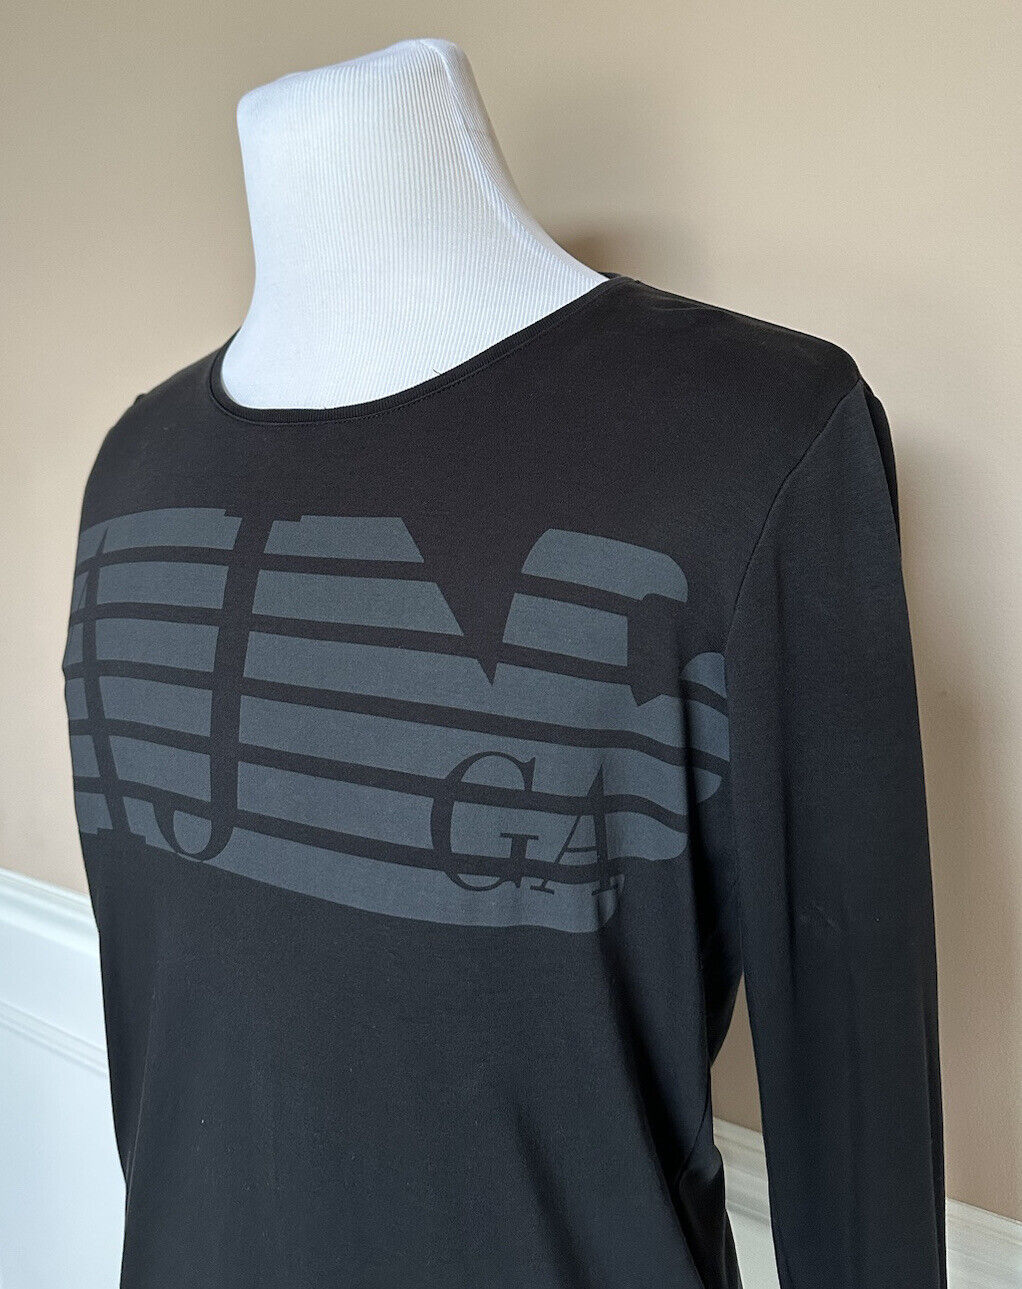 Armani Exchange Black Long Sleeve Slim Fit T-Shirt Size XL